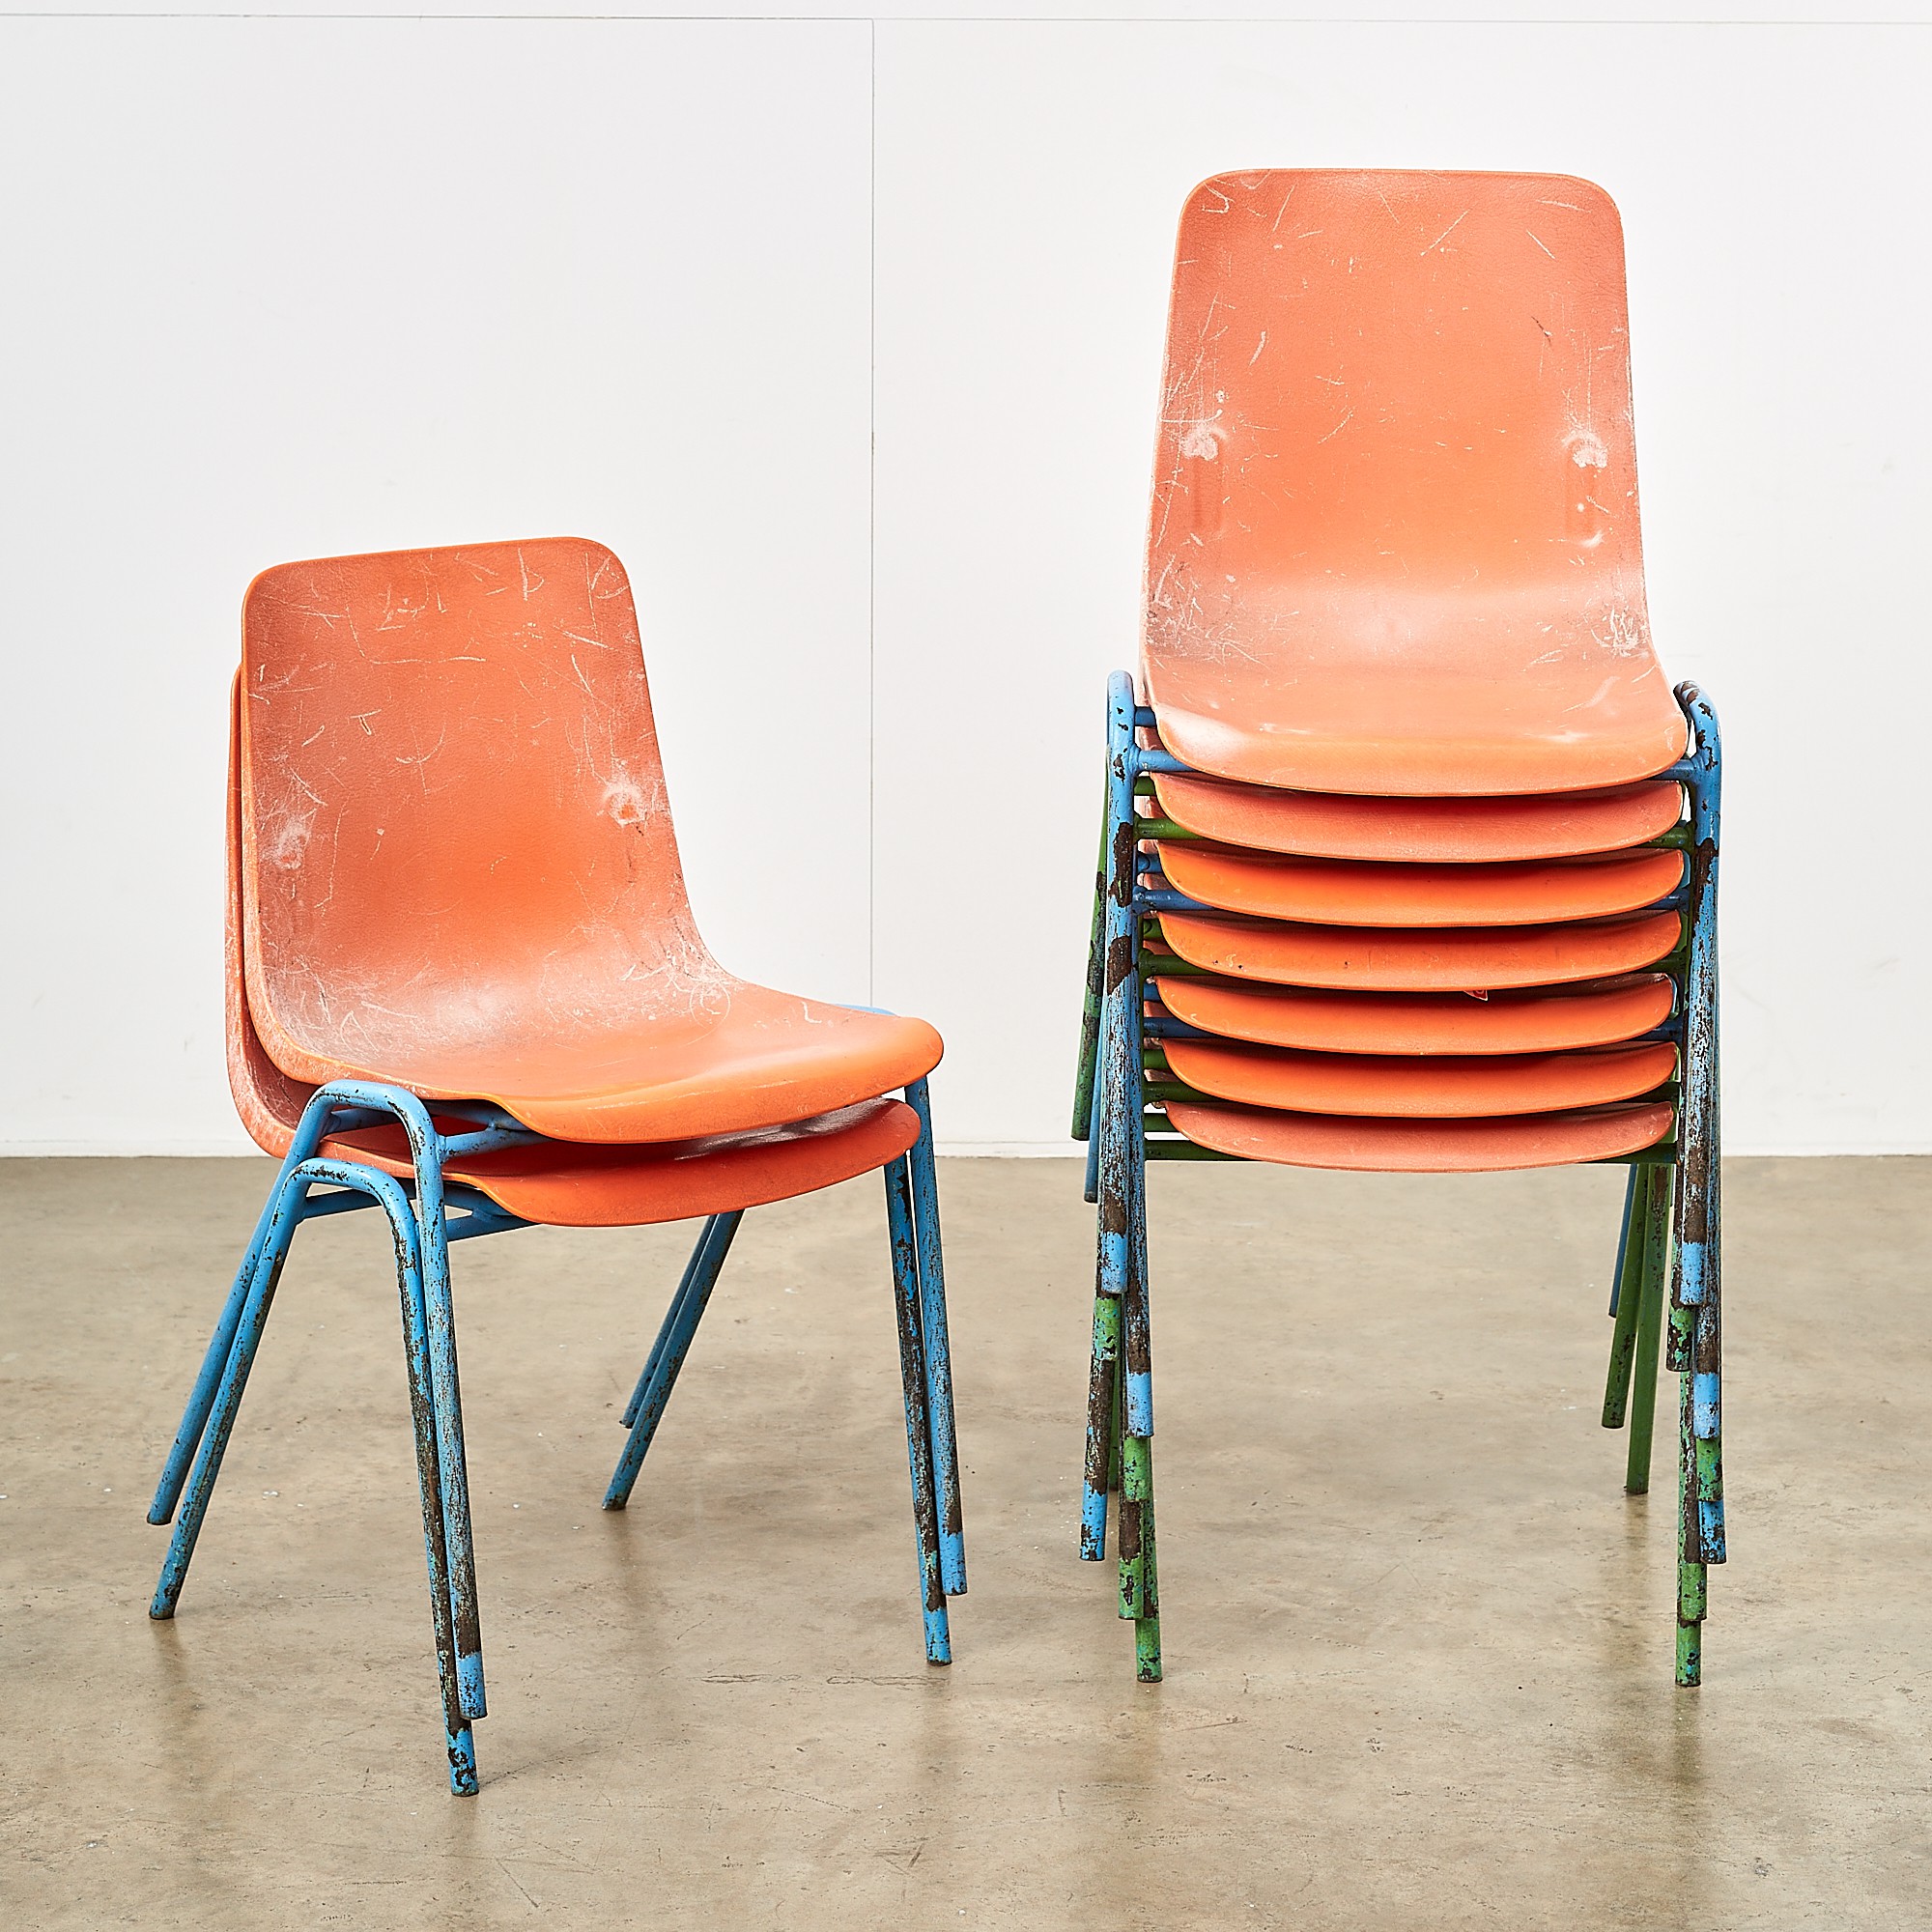 Distressed Orange School Chairs